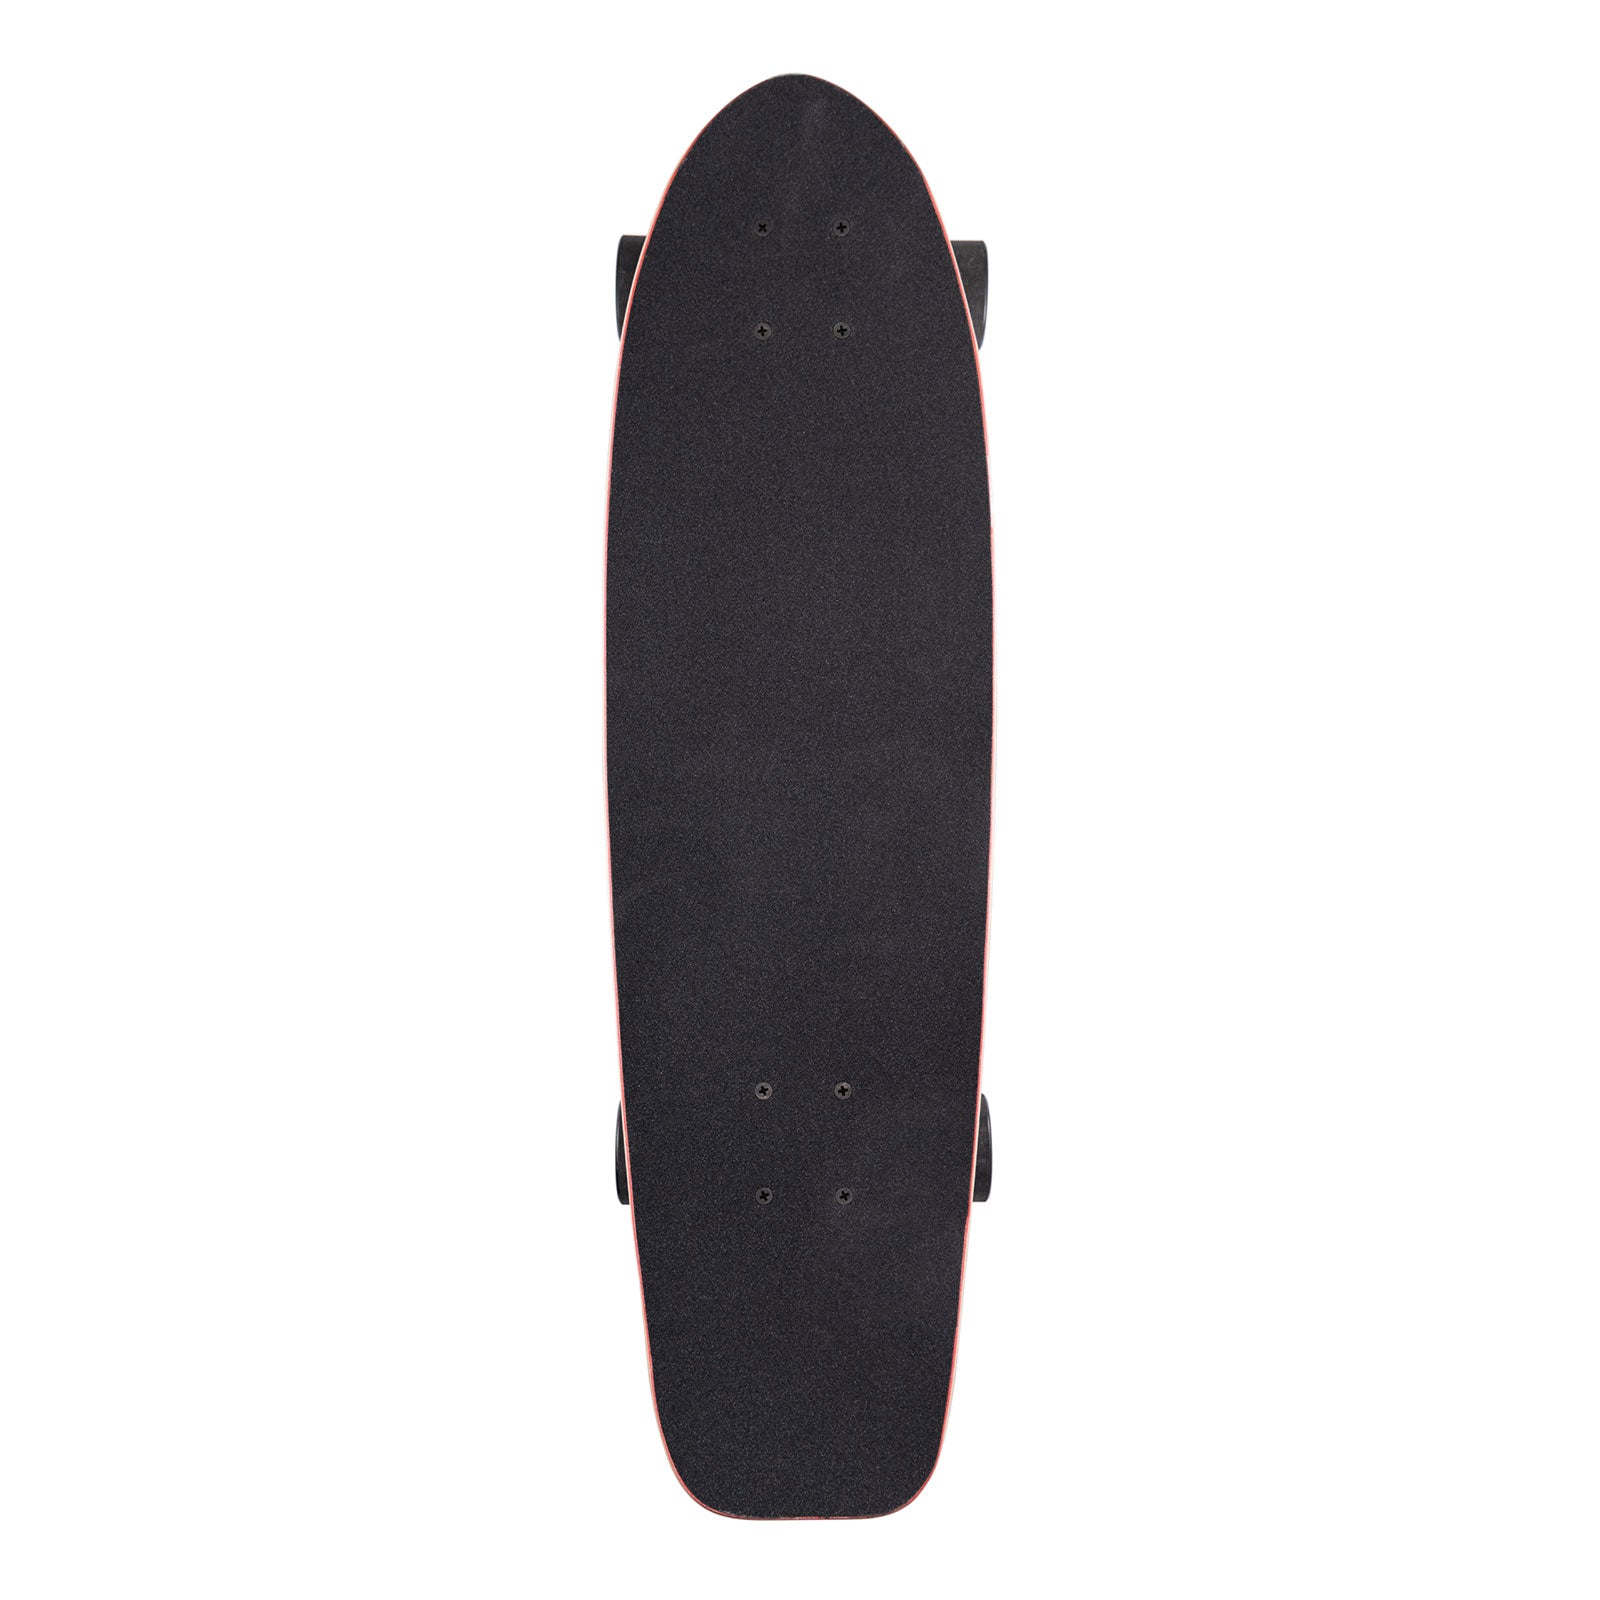 RAD Complete Retro Roller &quot; x 2&quot; Skateboard-Skateboards-PEROZ Accessories